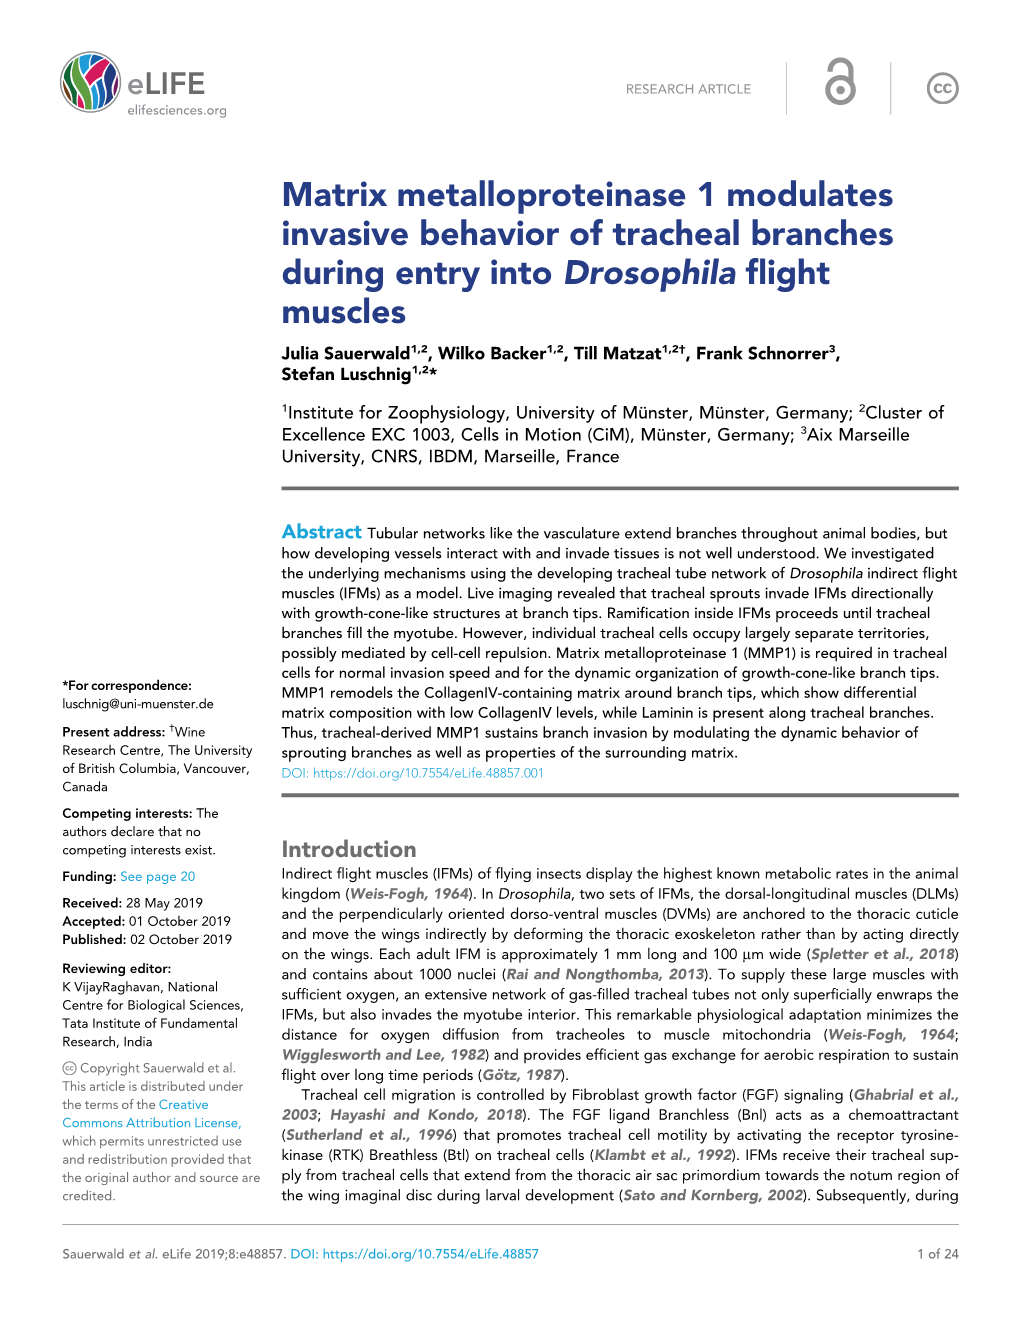 Matrix Metalloproteinase 1 Modulates Invasive Behavior of Tracheal